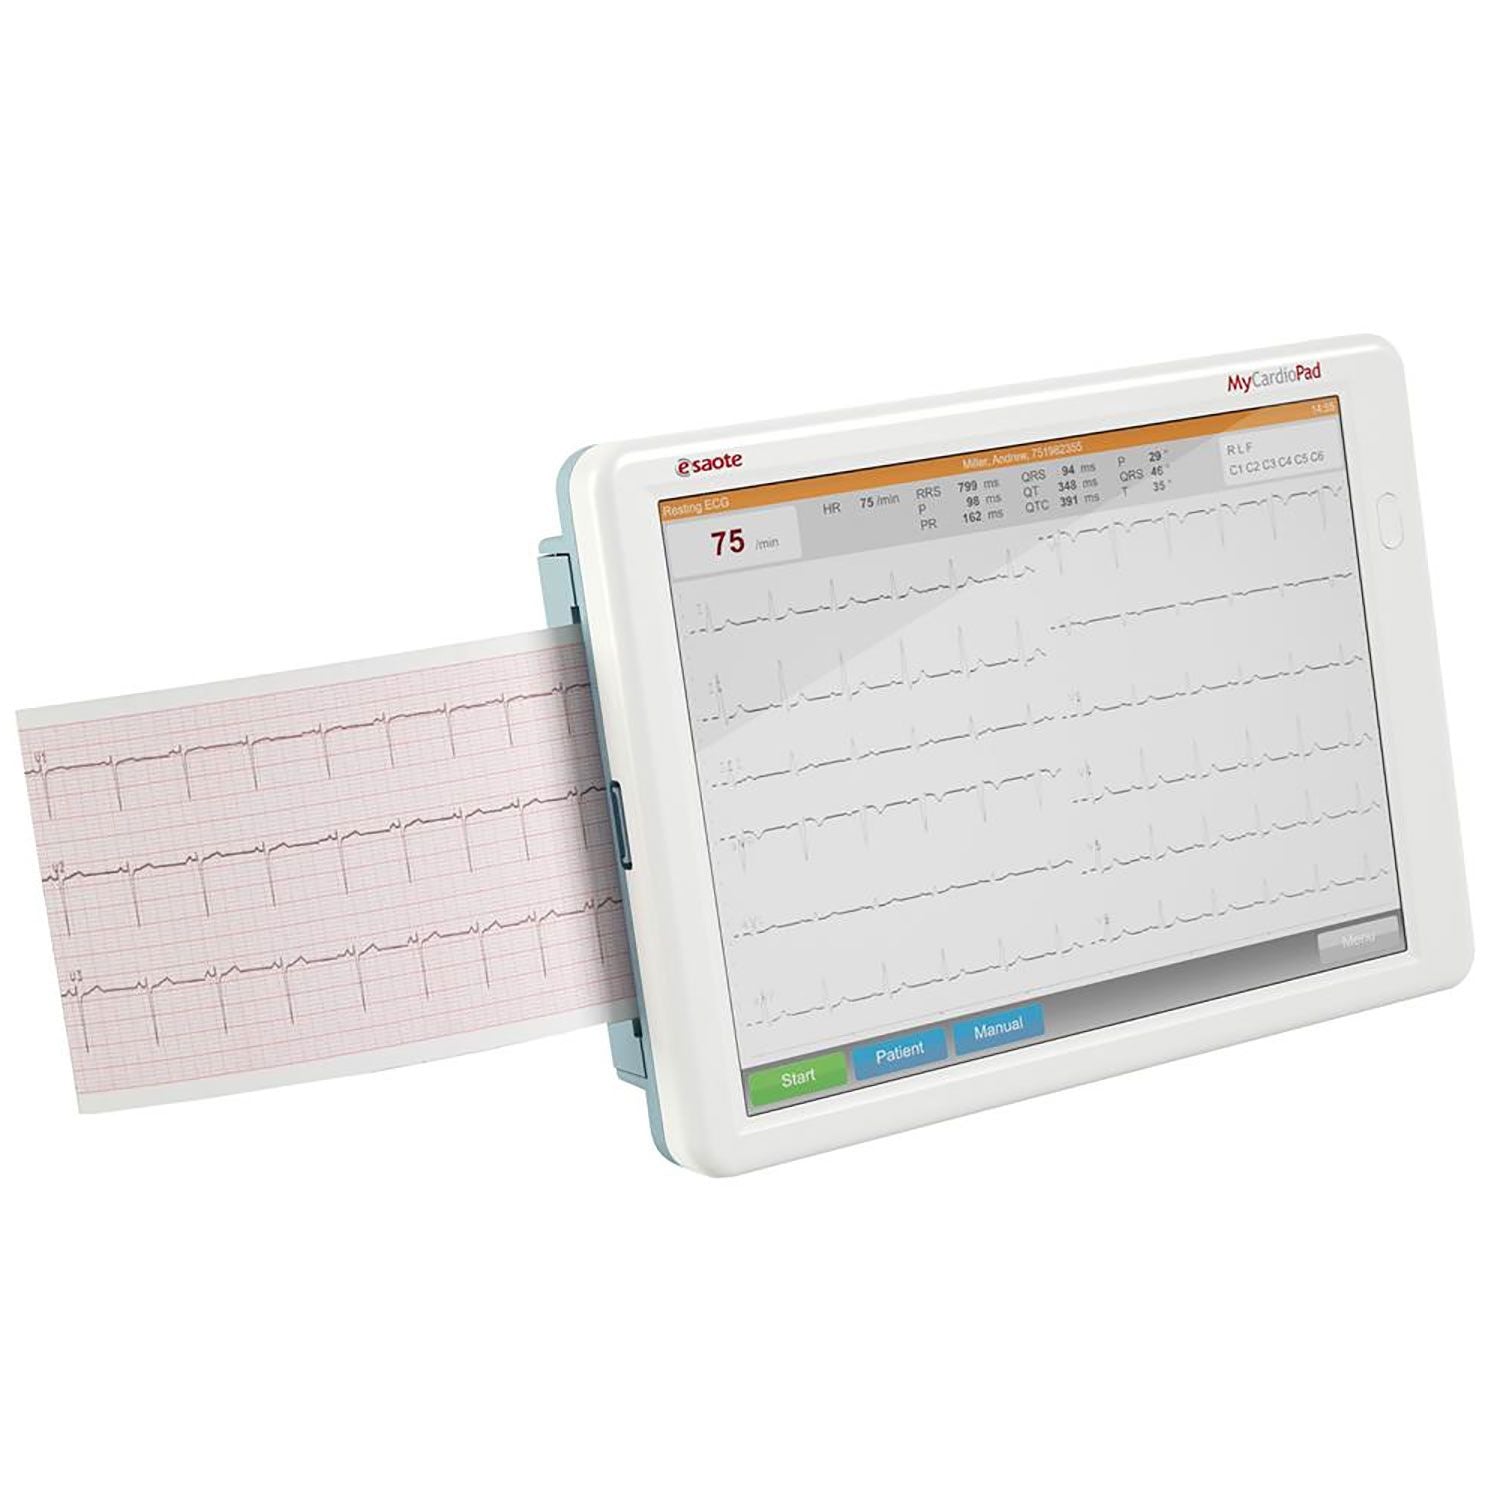 seca CTCardioPad with Interpretive Software